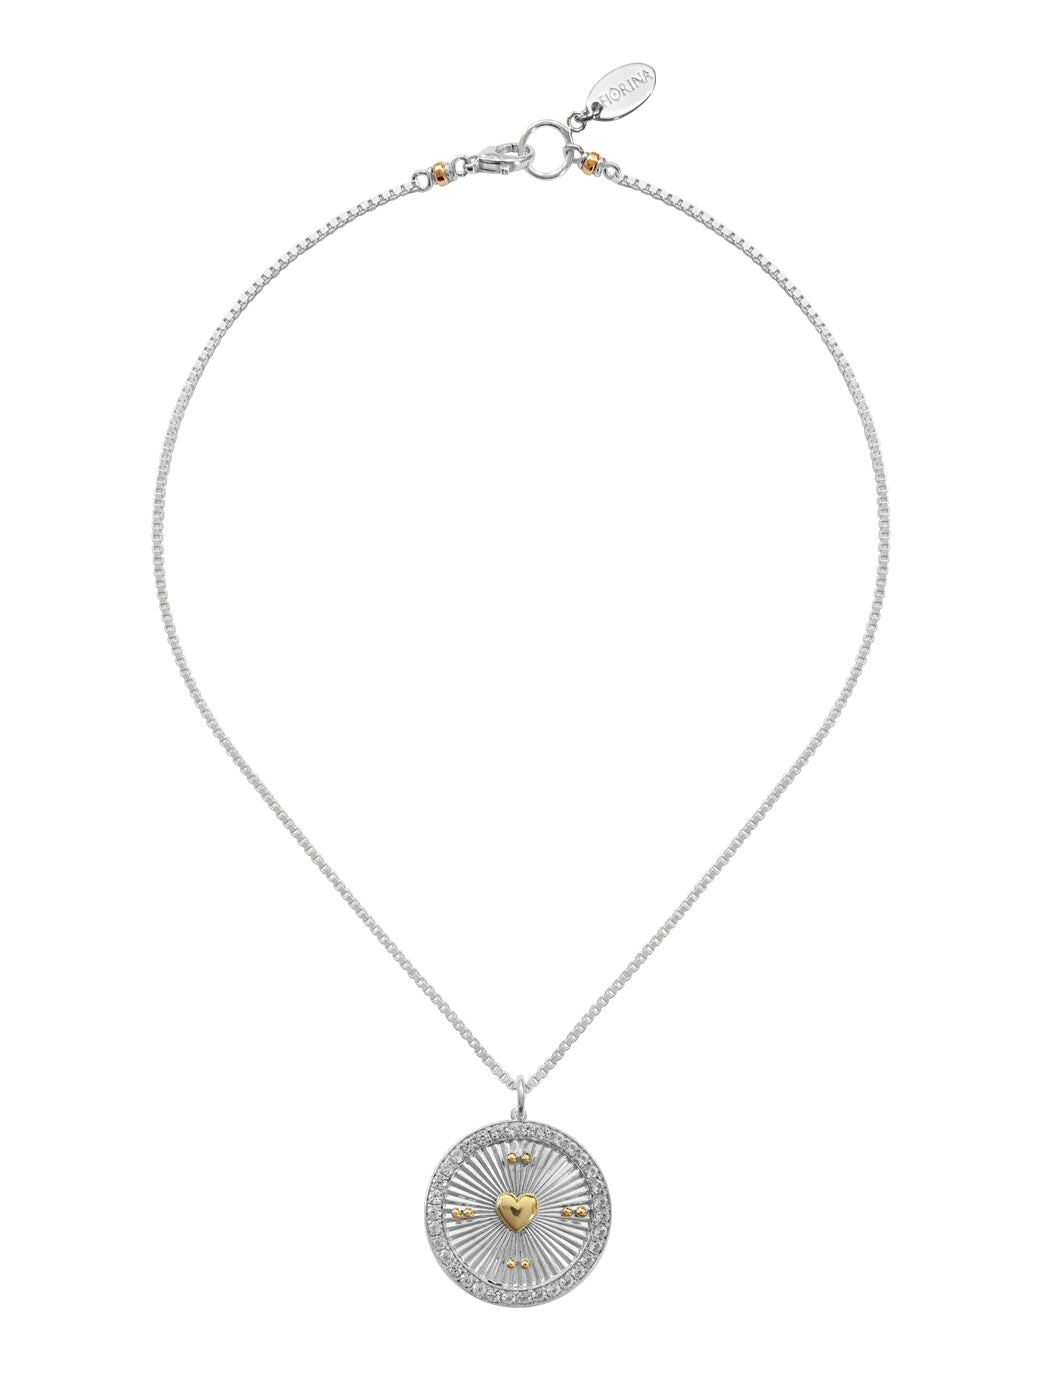 Fiorina Jewellery Sunray Necklace White Spinel Heart